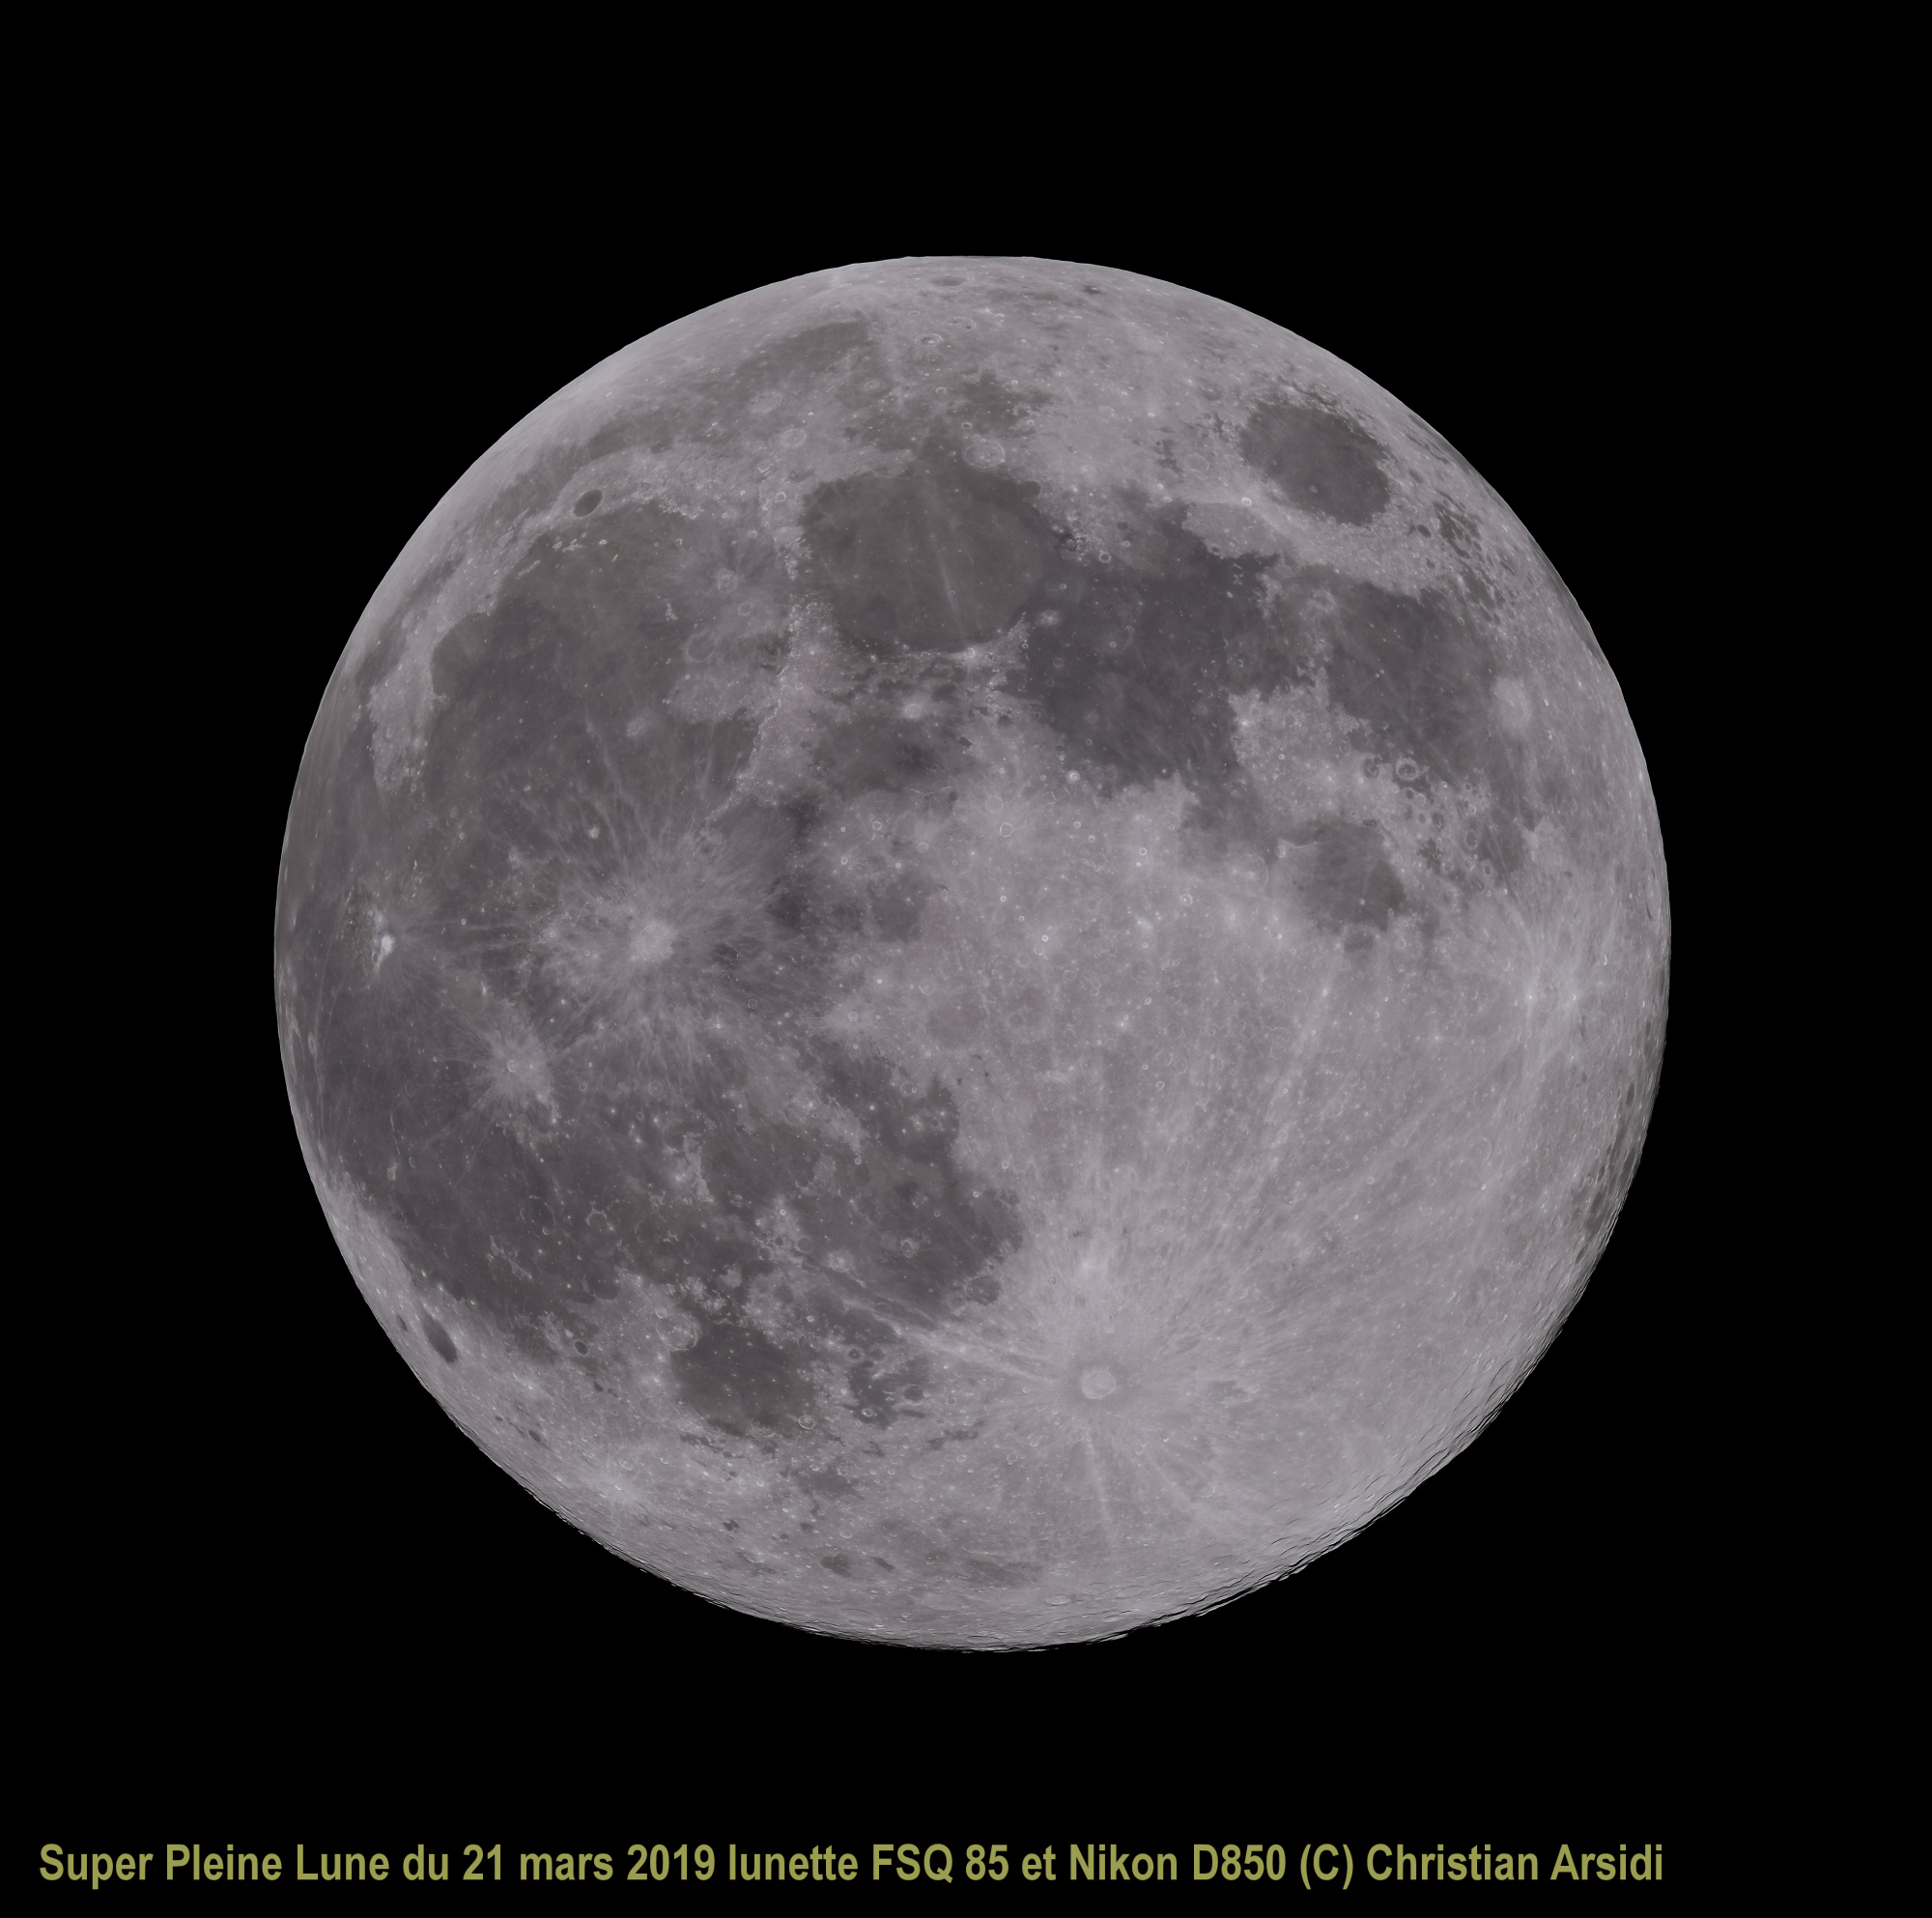 Pleine Lune  40 images TIFF_DxO 1 V 90% jpeg.jpg